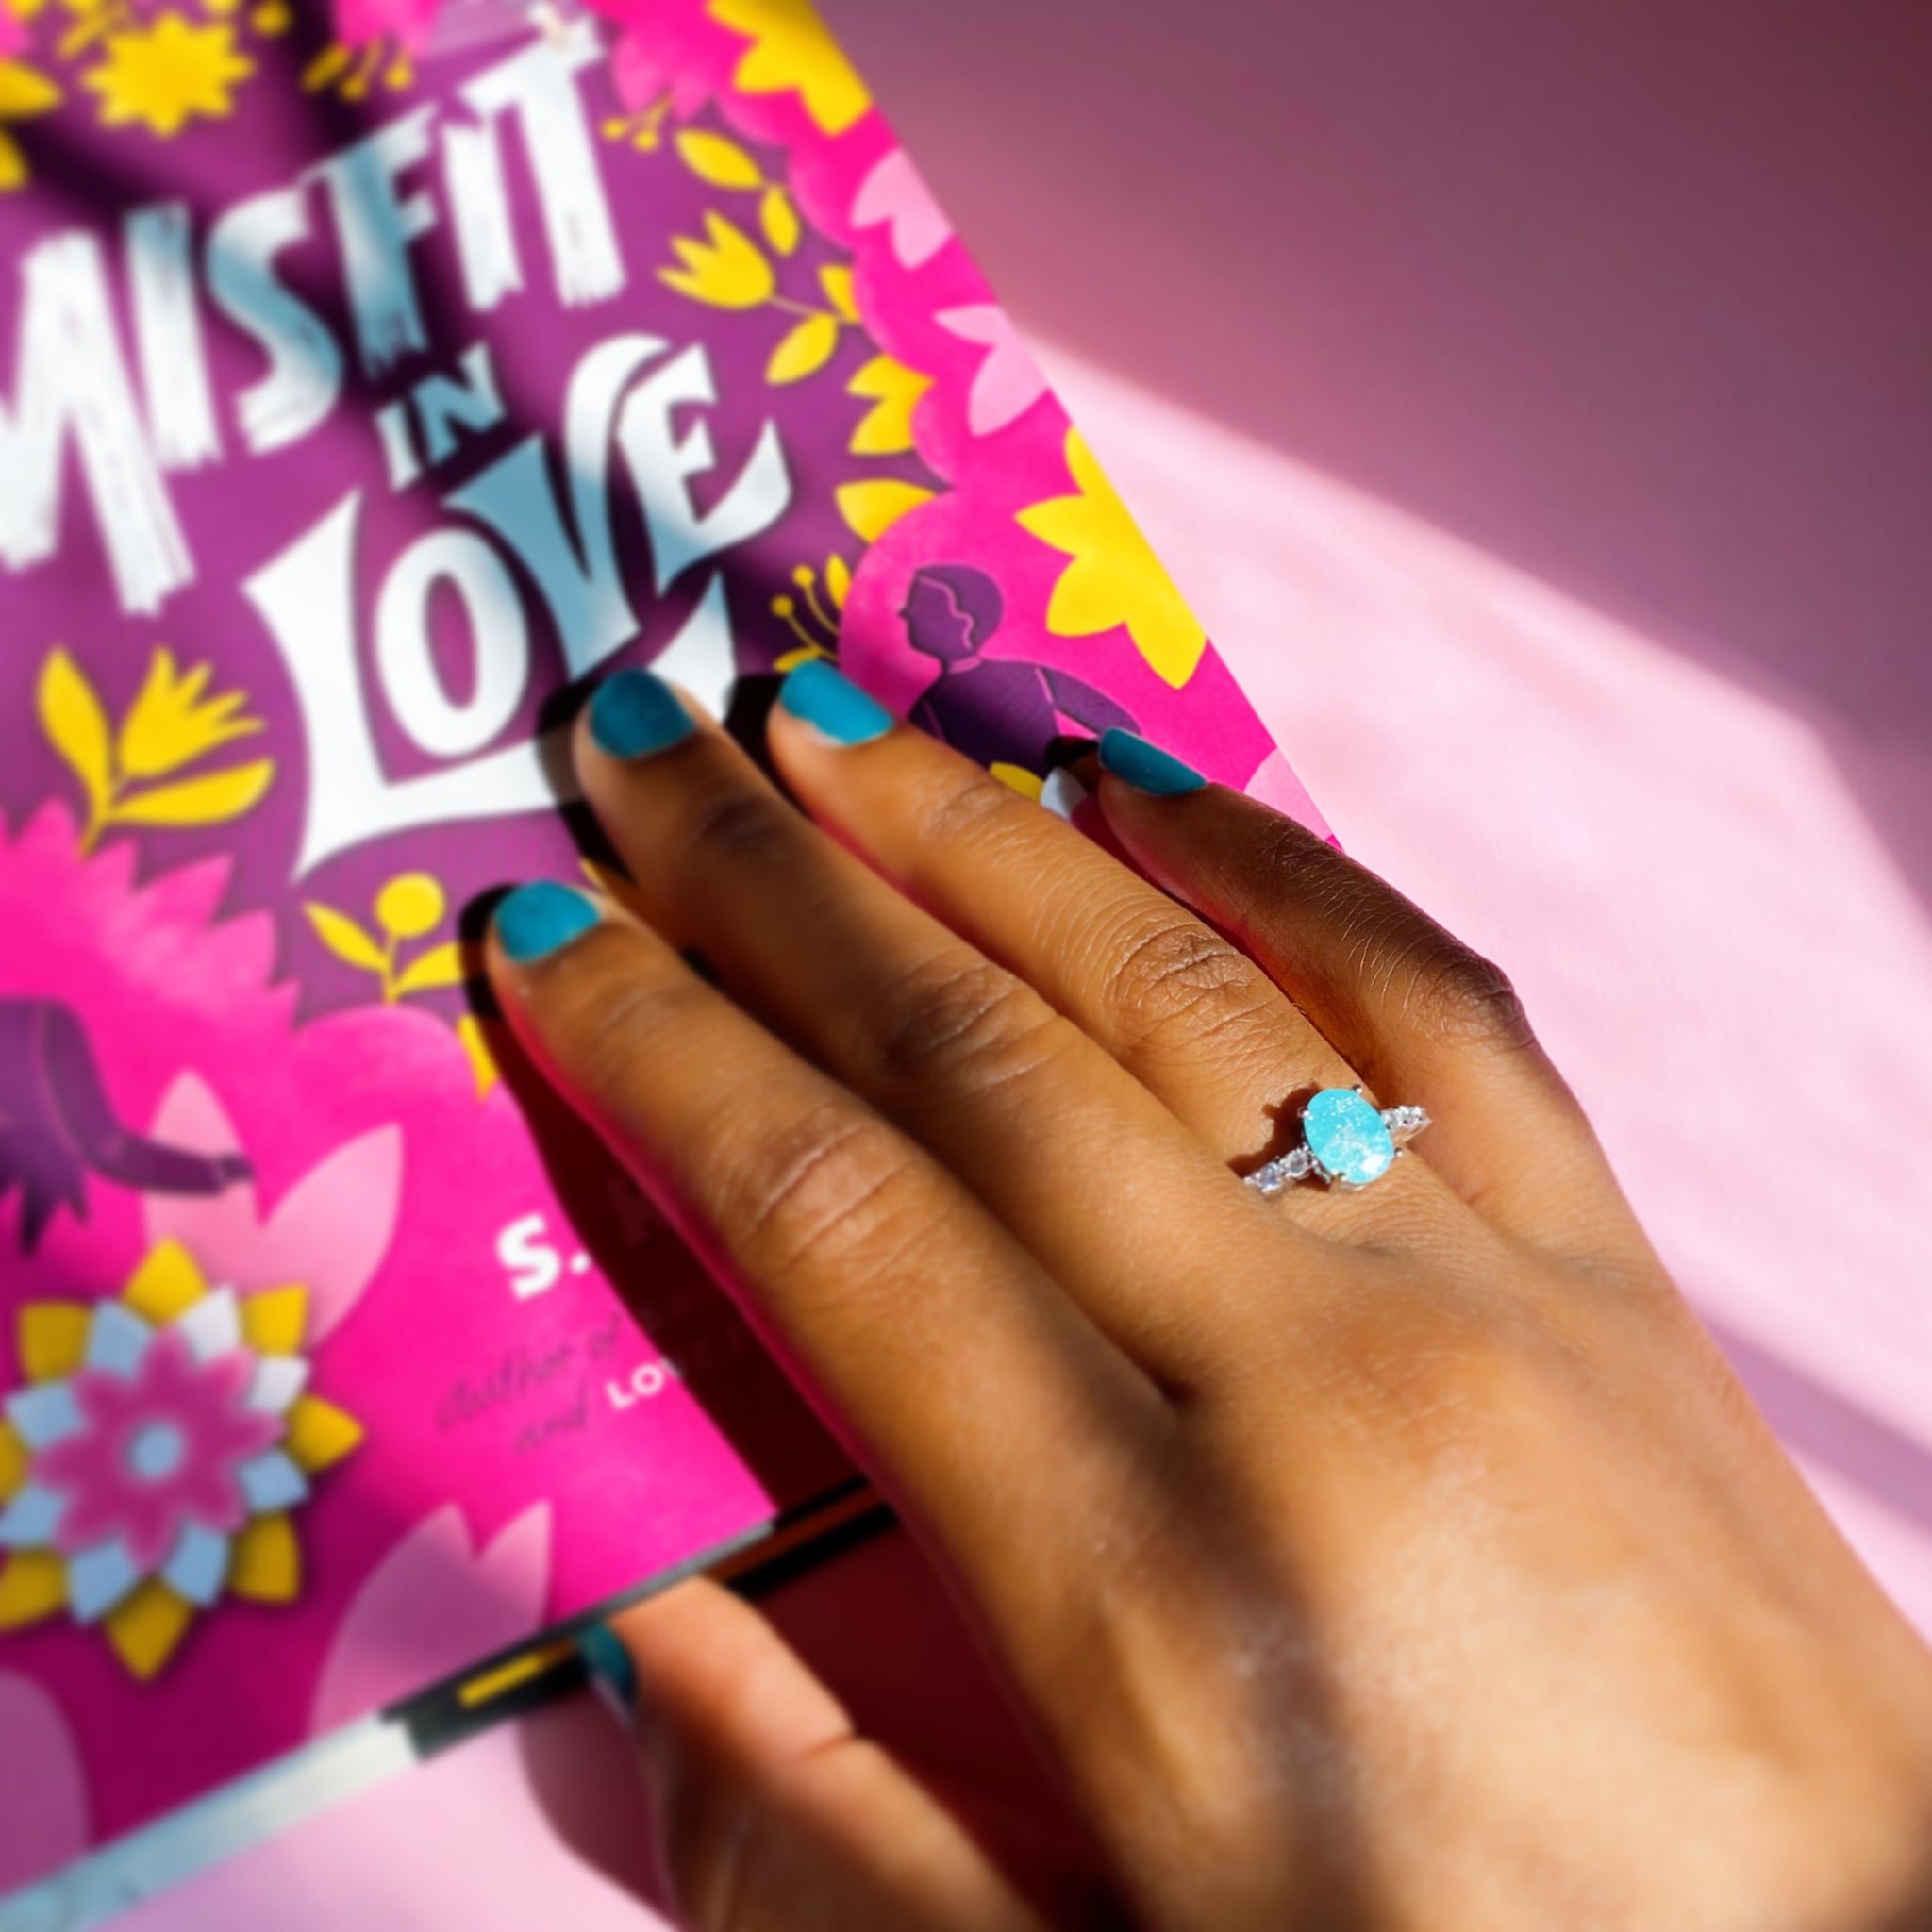 Wedding themed box (Misfit in Love)